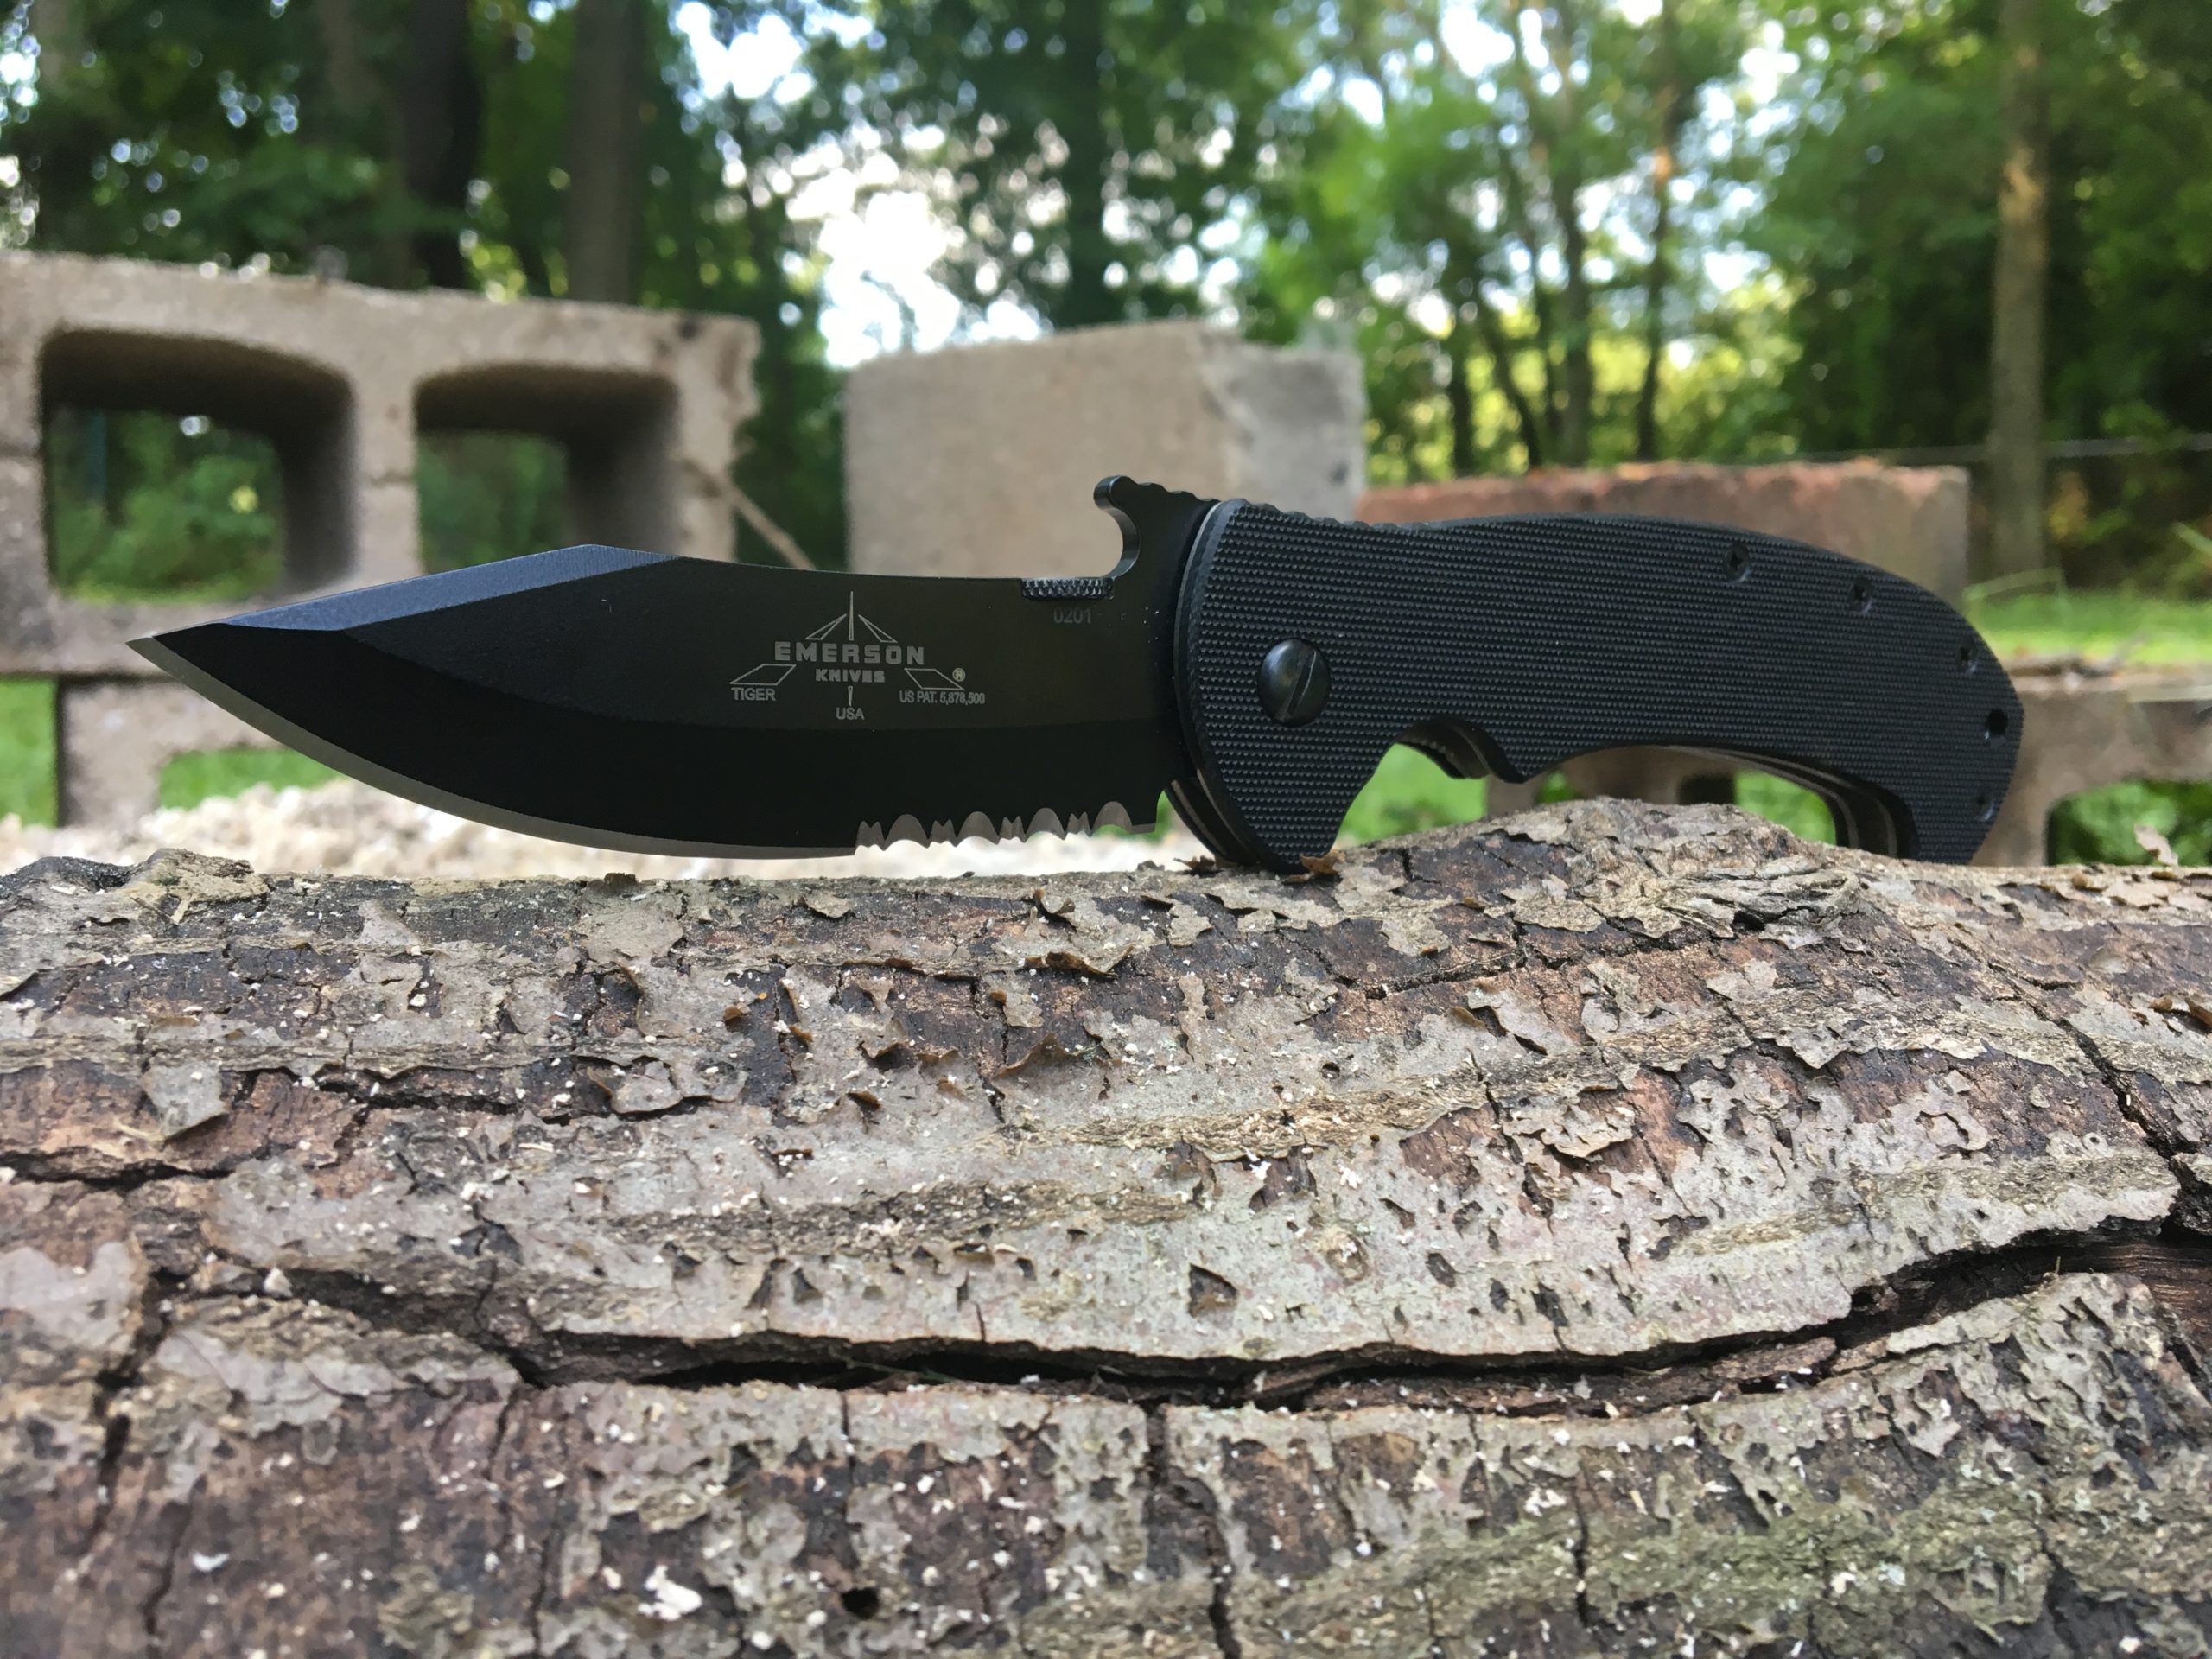 Emerson Knives Tiger | An Apex Predator of Folding Knives